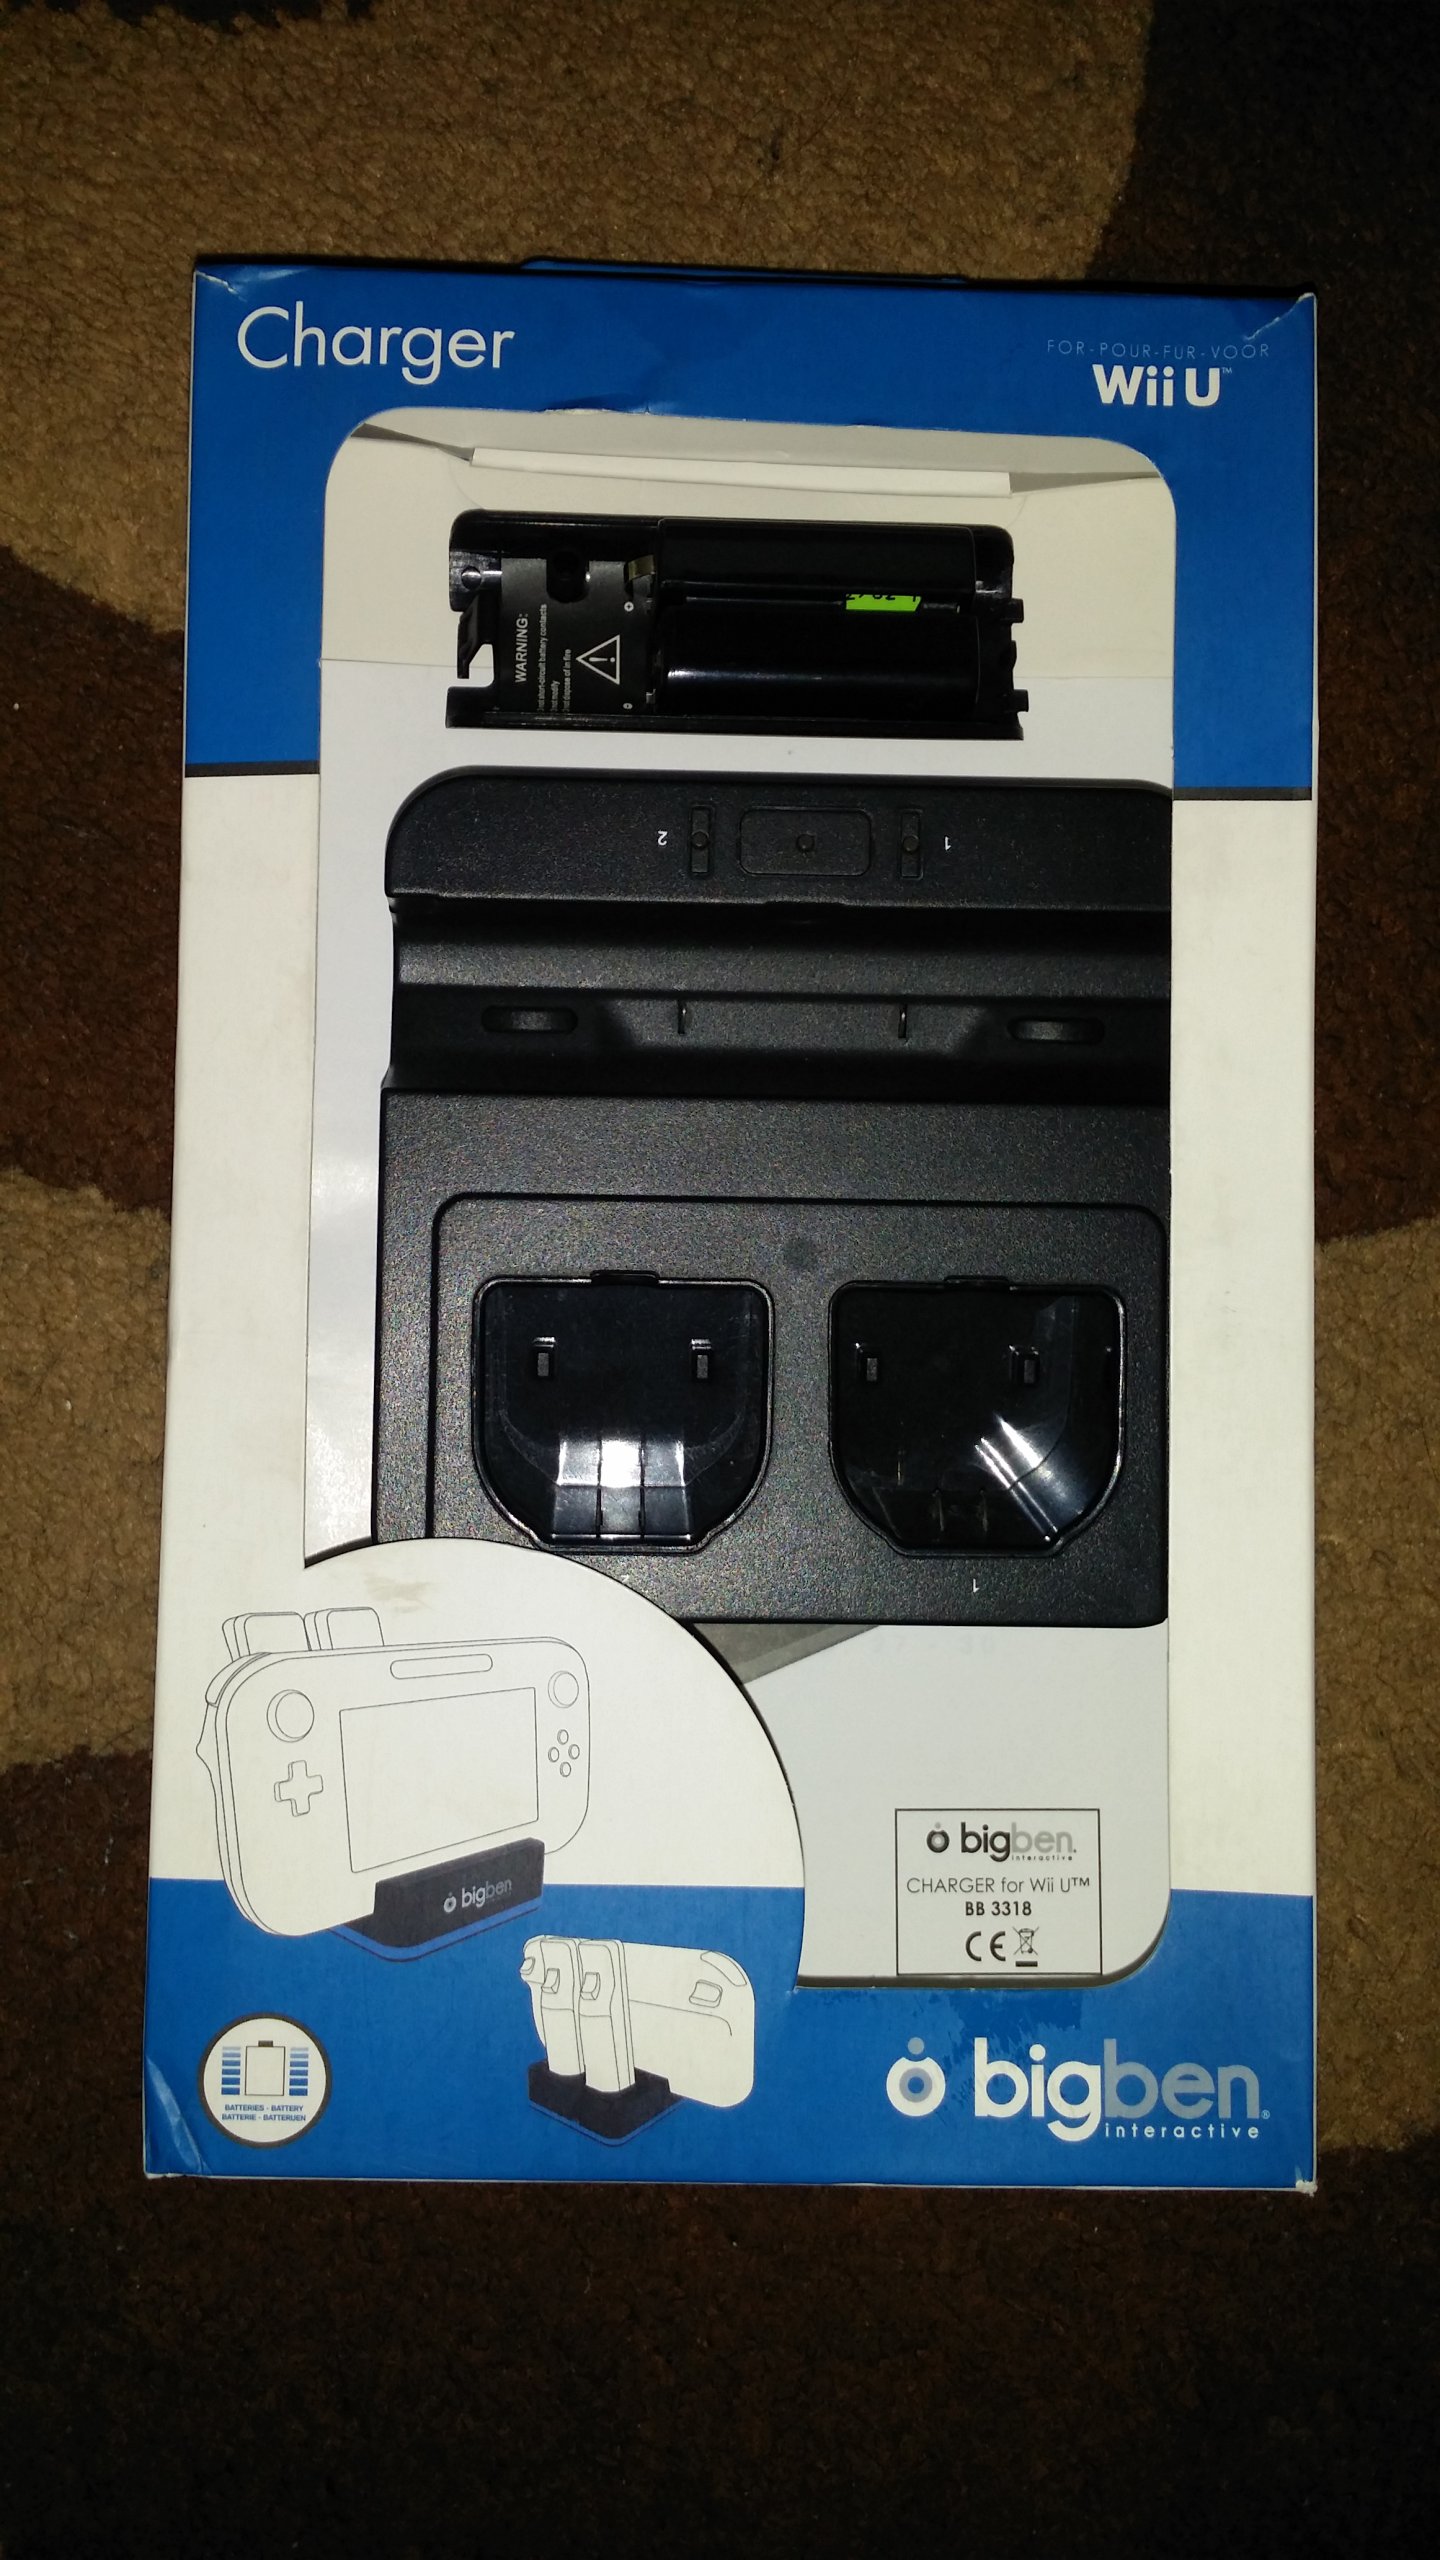 Ładowarka Big Ben Wii U Charger (Wii Remote)